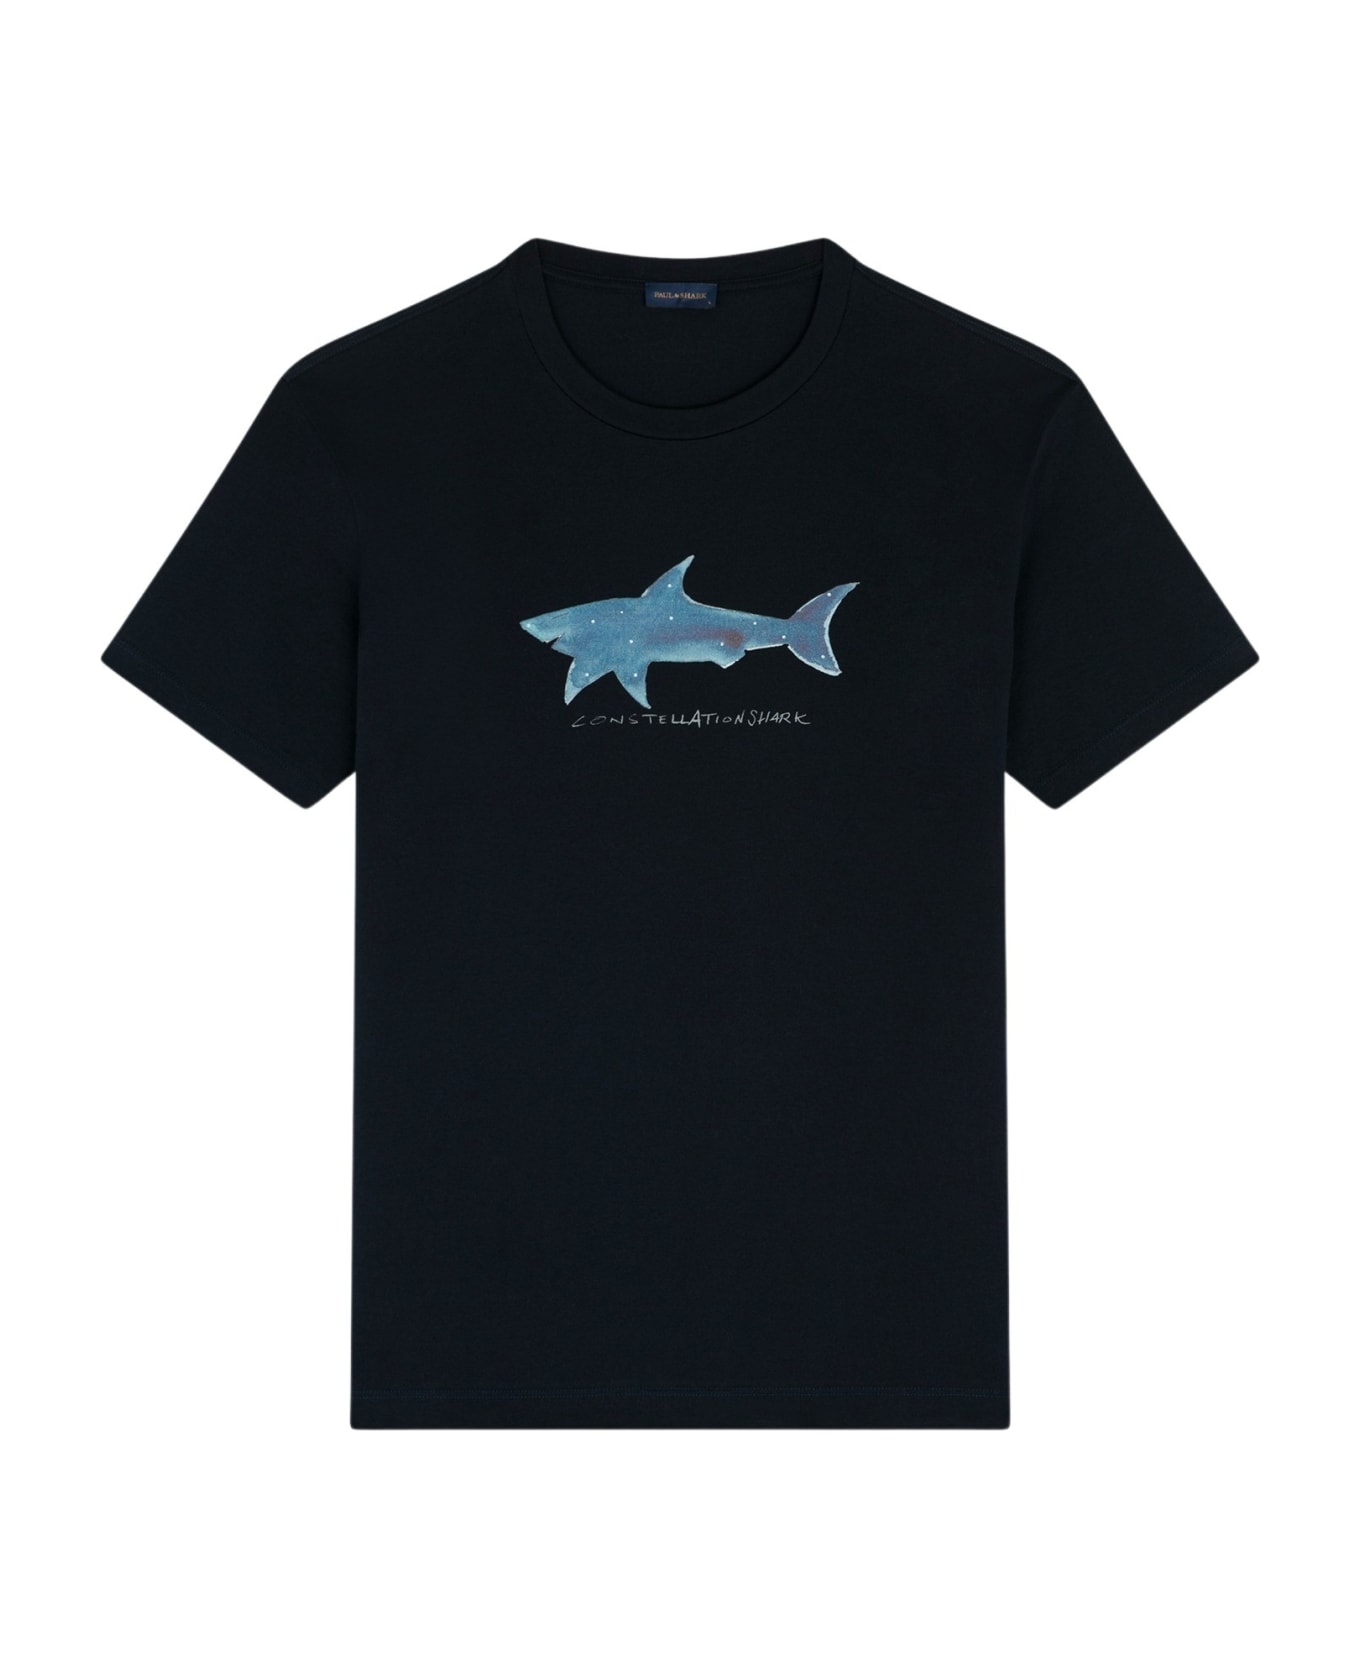 Paul&Shark Tshirt - Blue